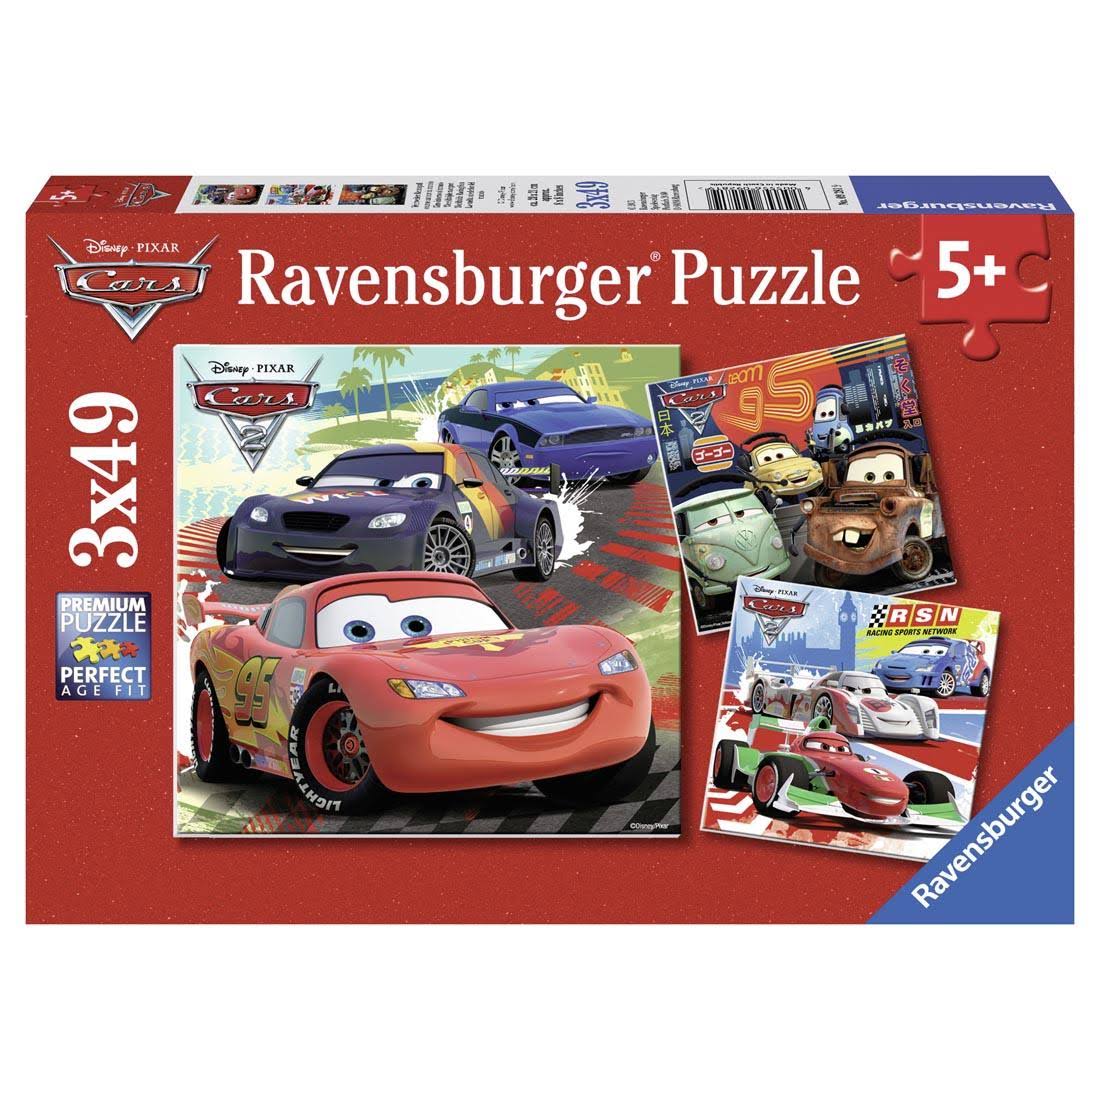 Ravensburger Jigsaw Puzzle Set - Disney Pixar Cars, 3 x 49 Pieces